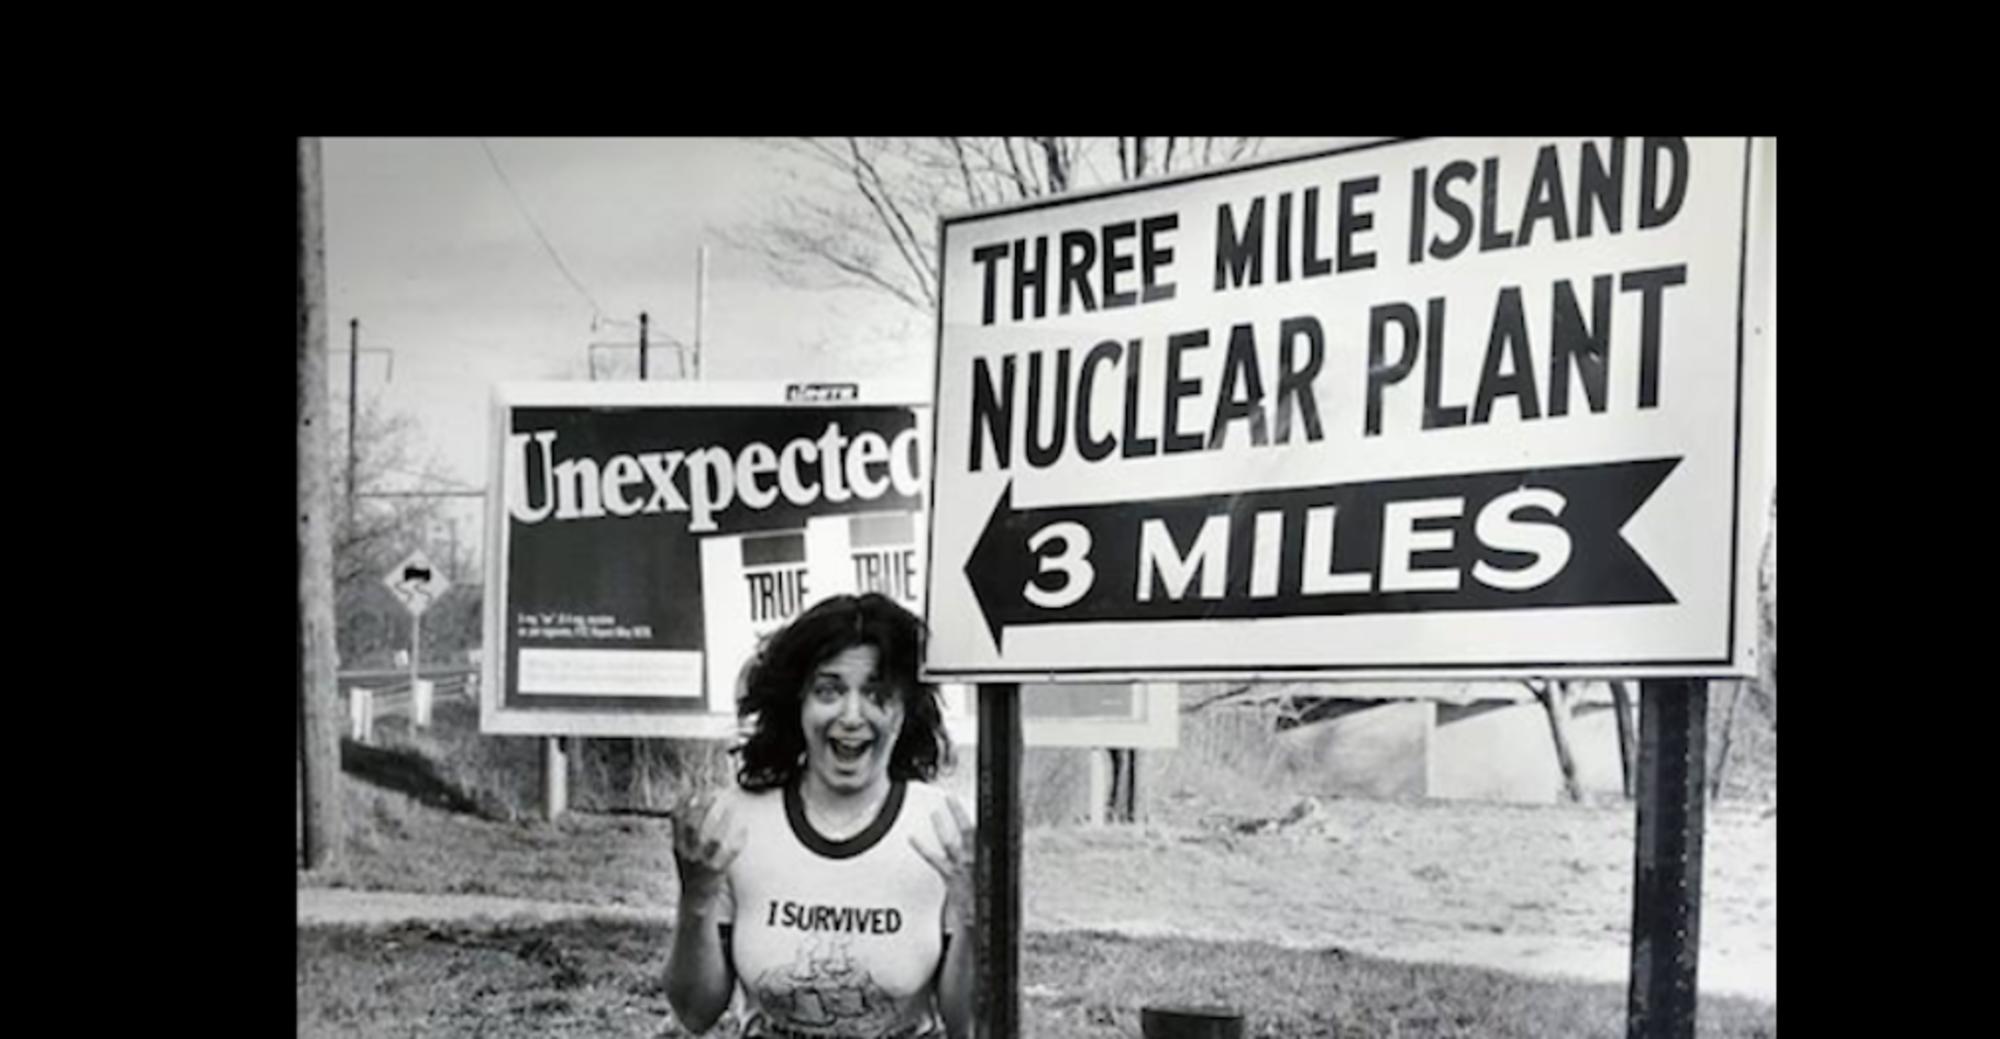 Libbe HaLevy, víctima de Three Mile Island, en 1979. Fuente: Beyond Nuclear International